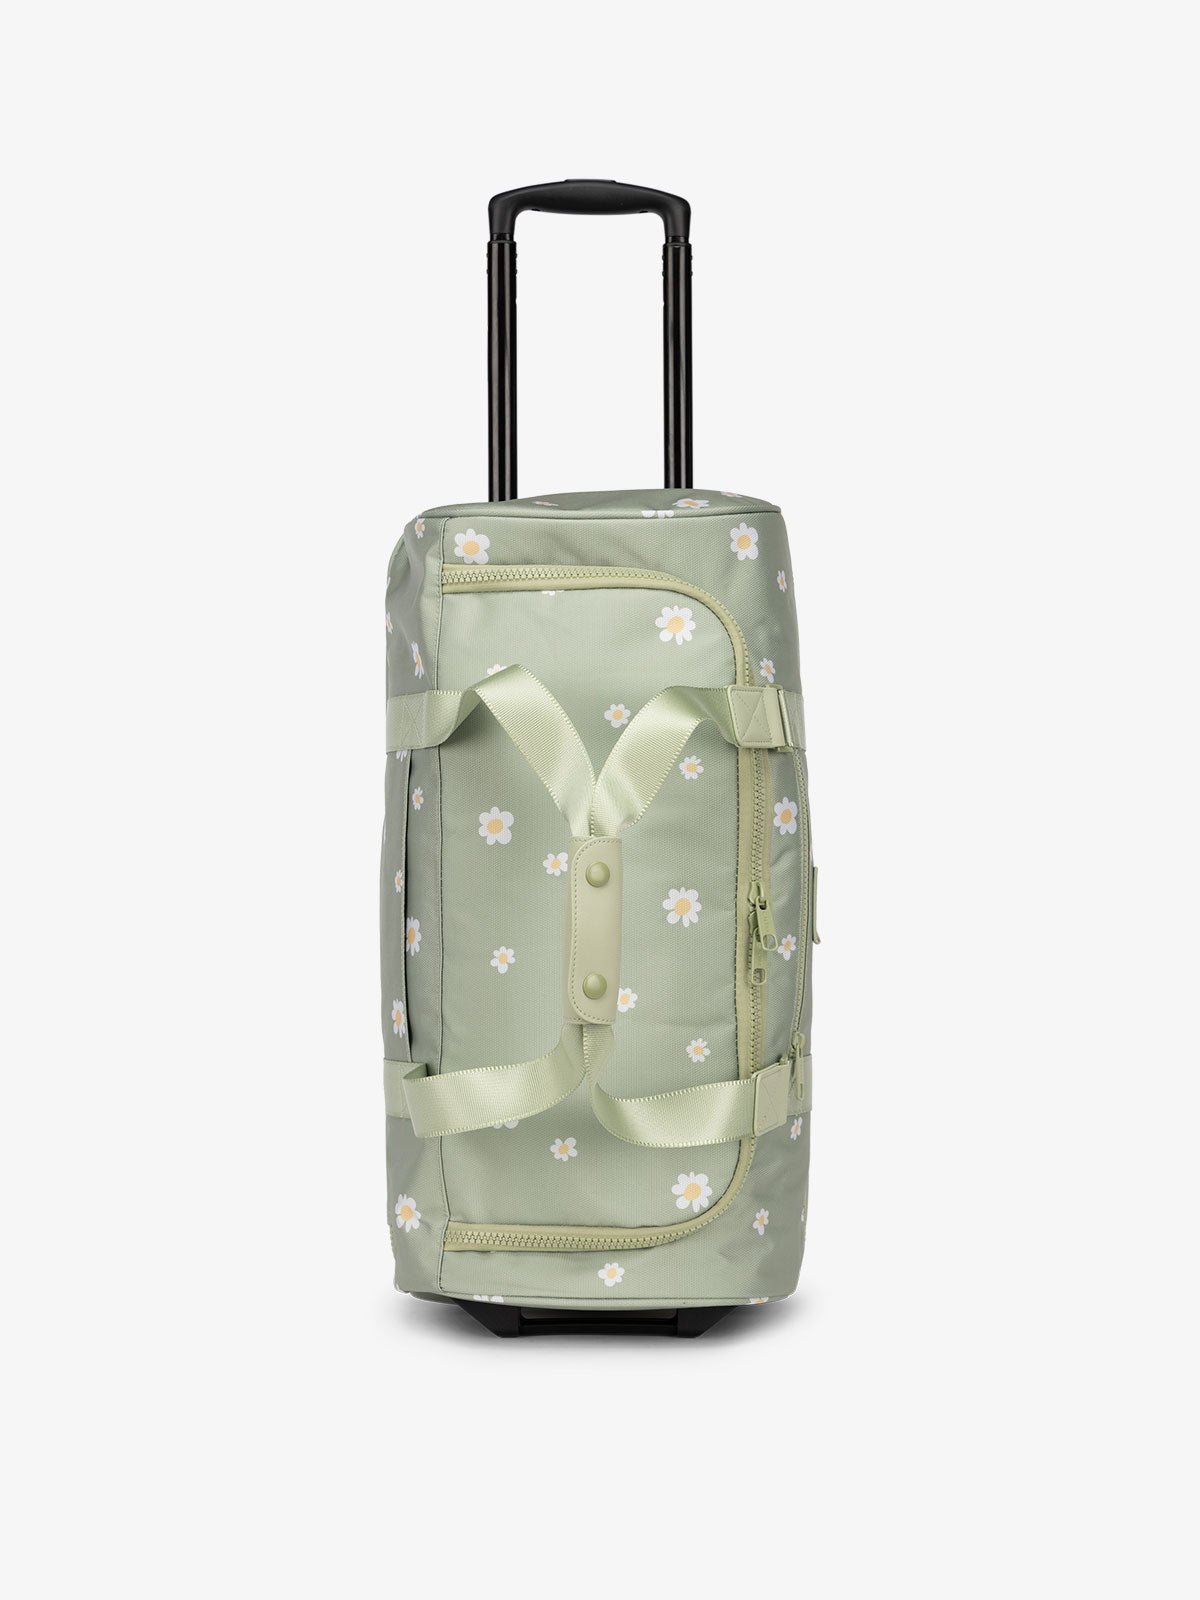 CALPAK Stevyn Rolling Duffle carry-on 22-inch bag in daisy